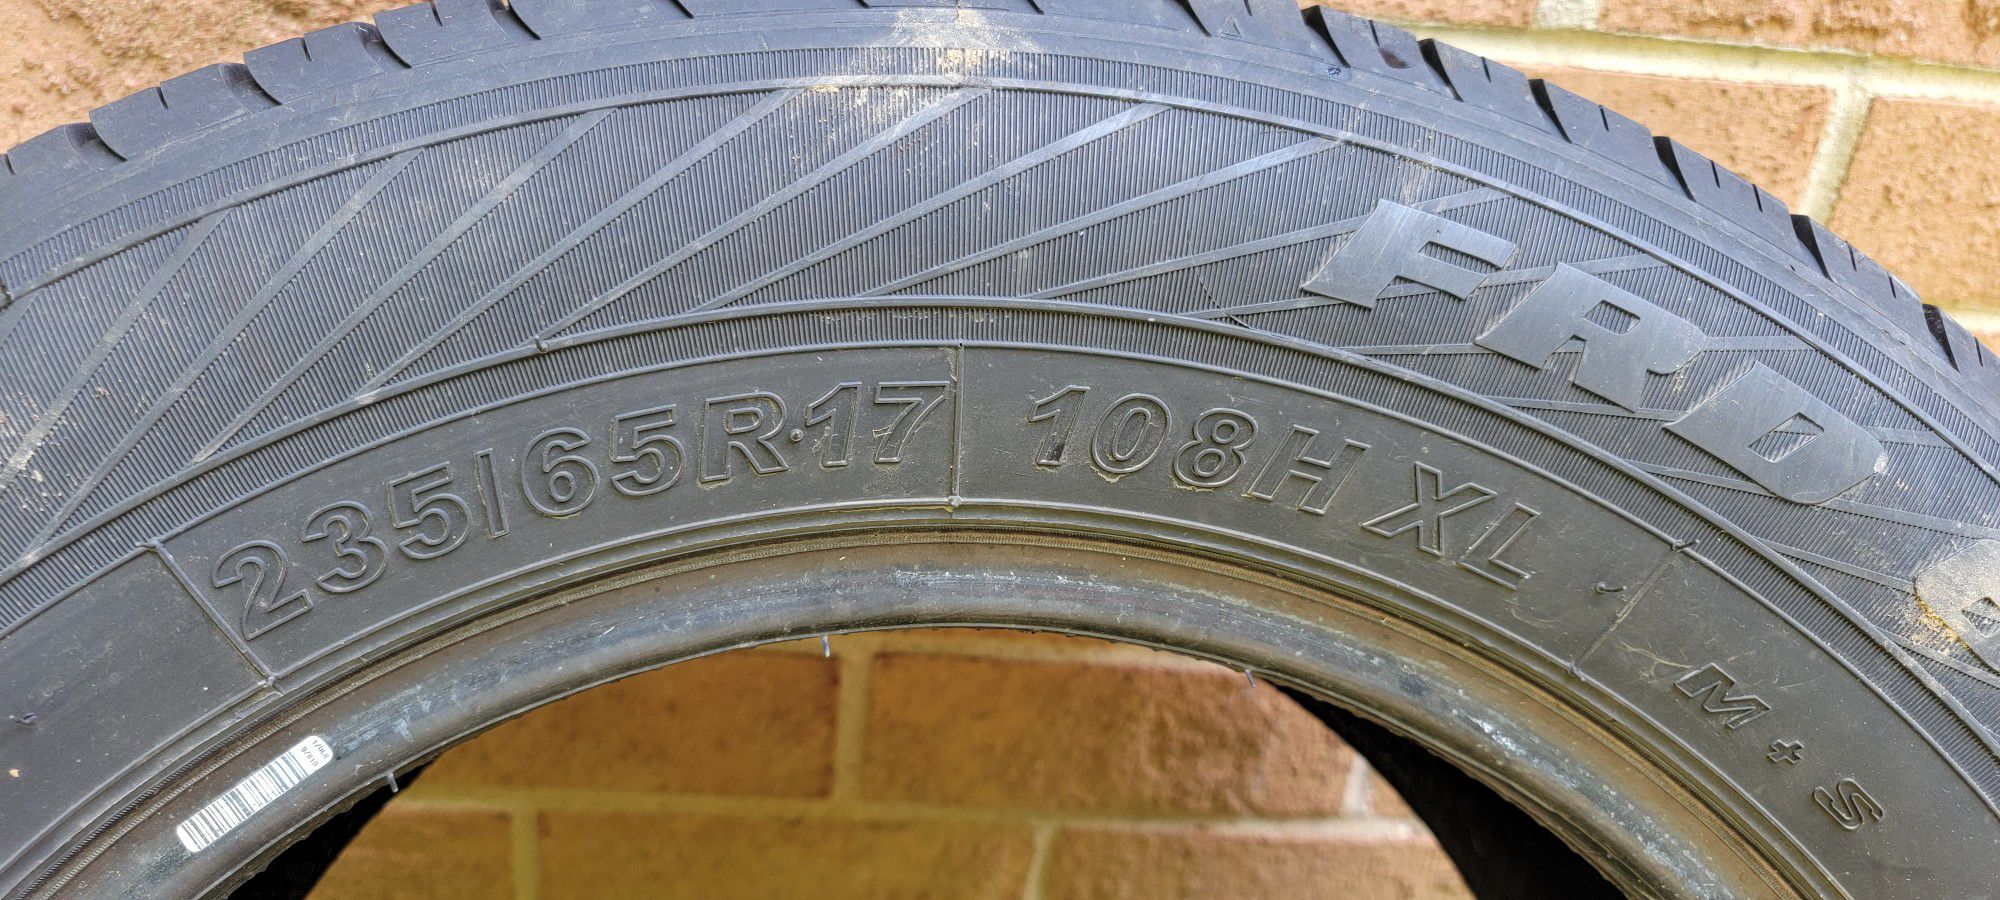 235/65R17 Tires